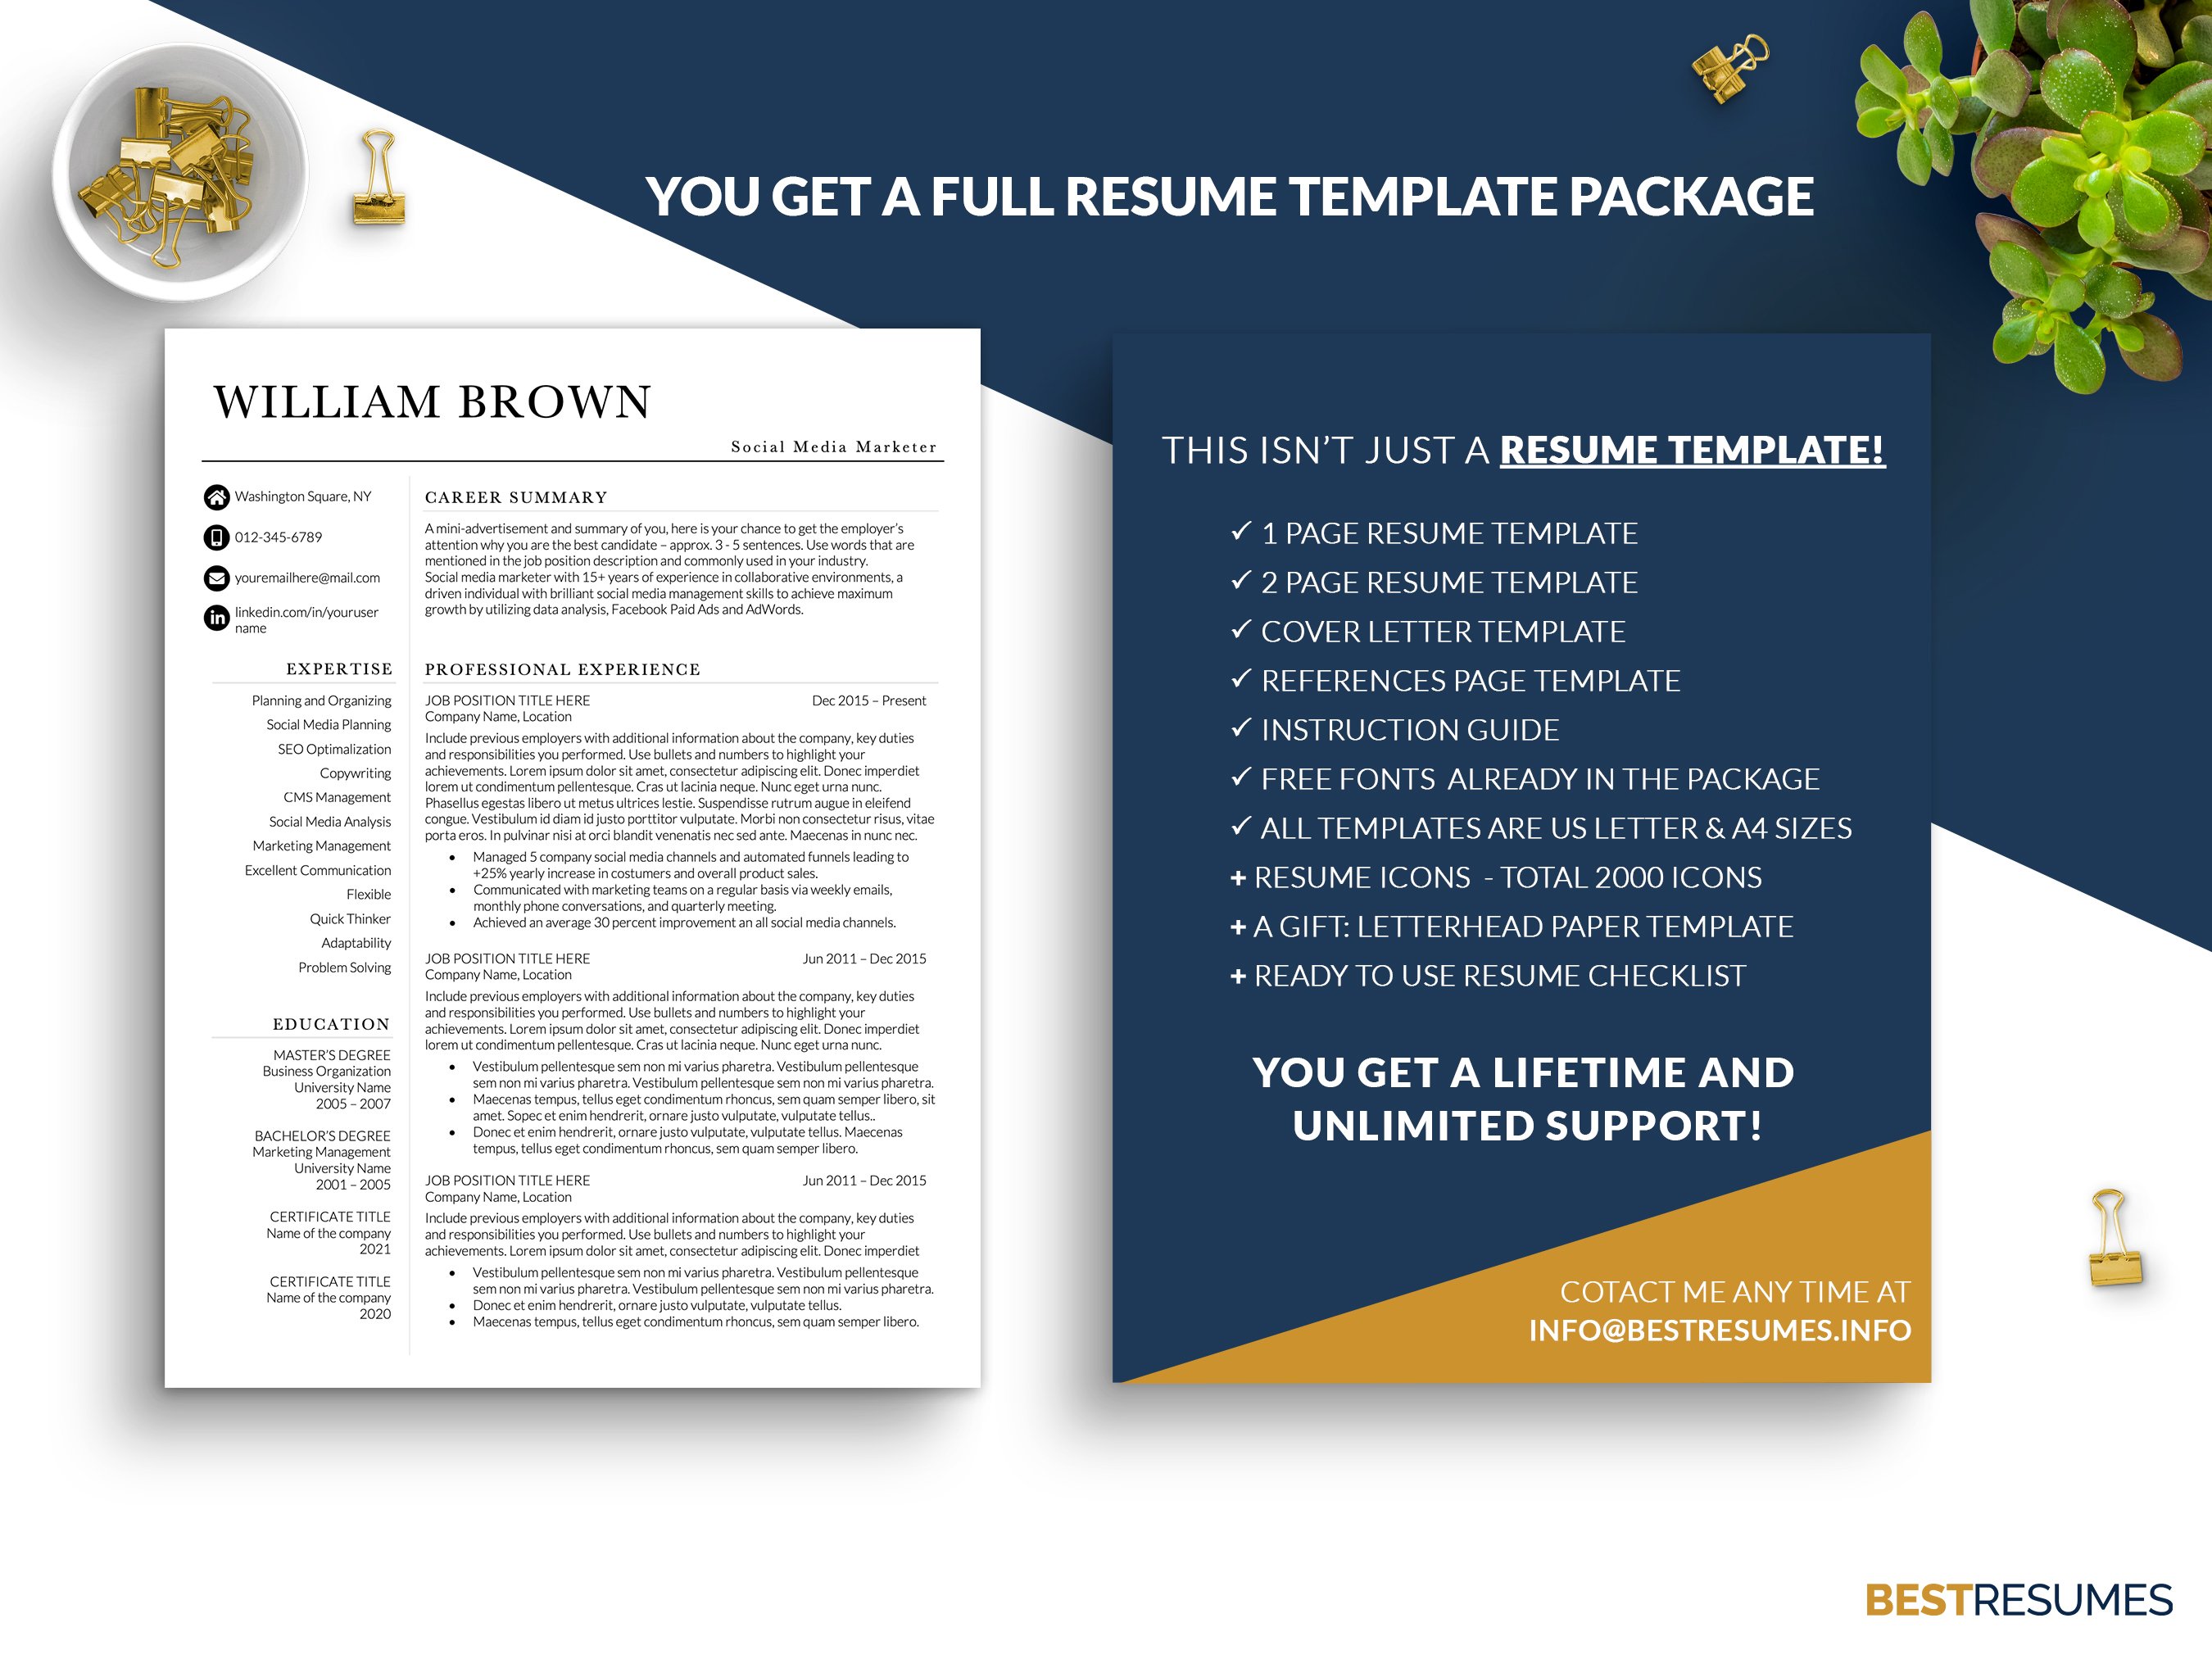 social media marketing resume template resume help william brown 509